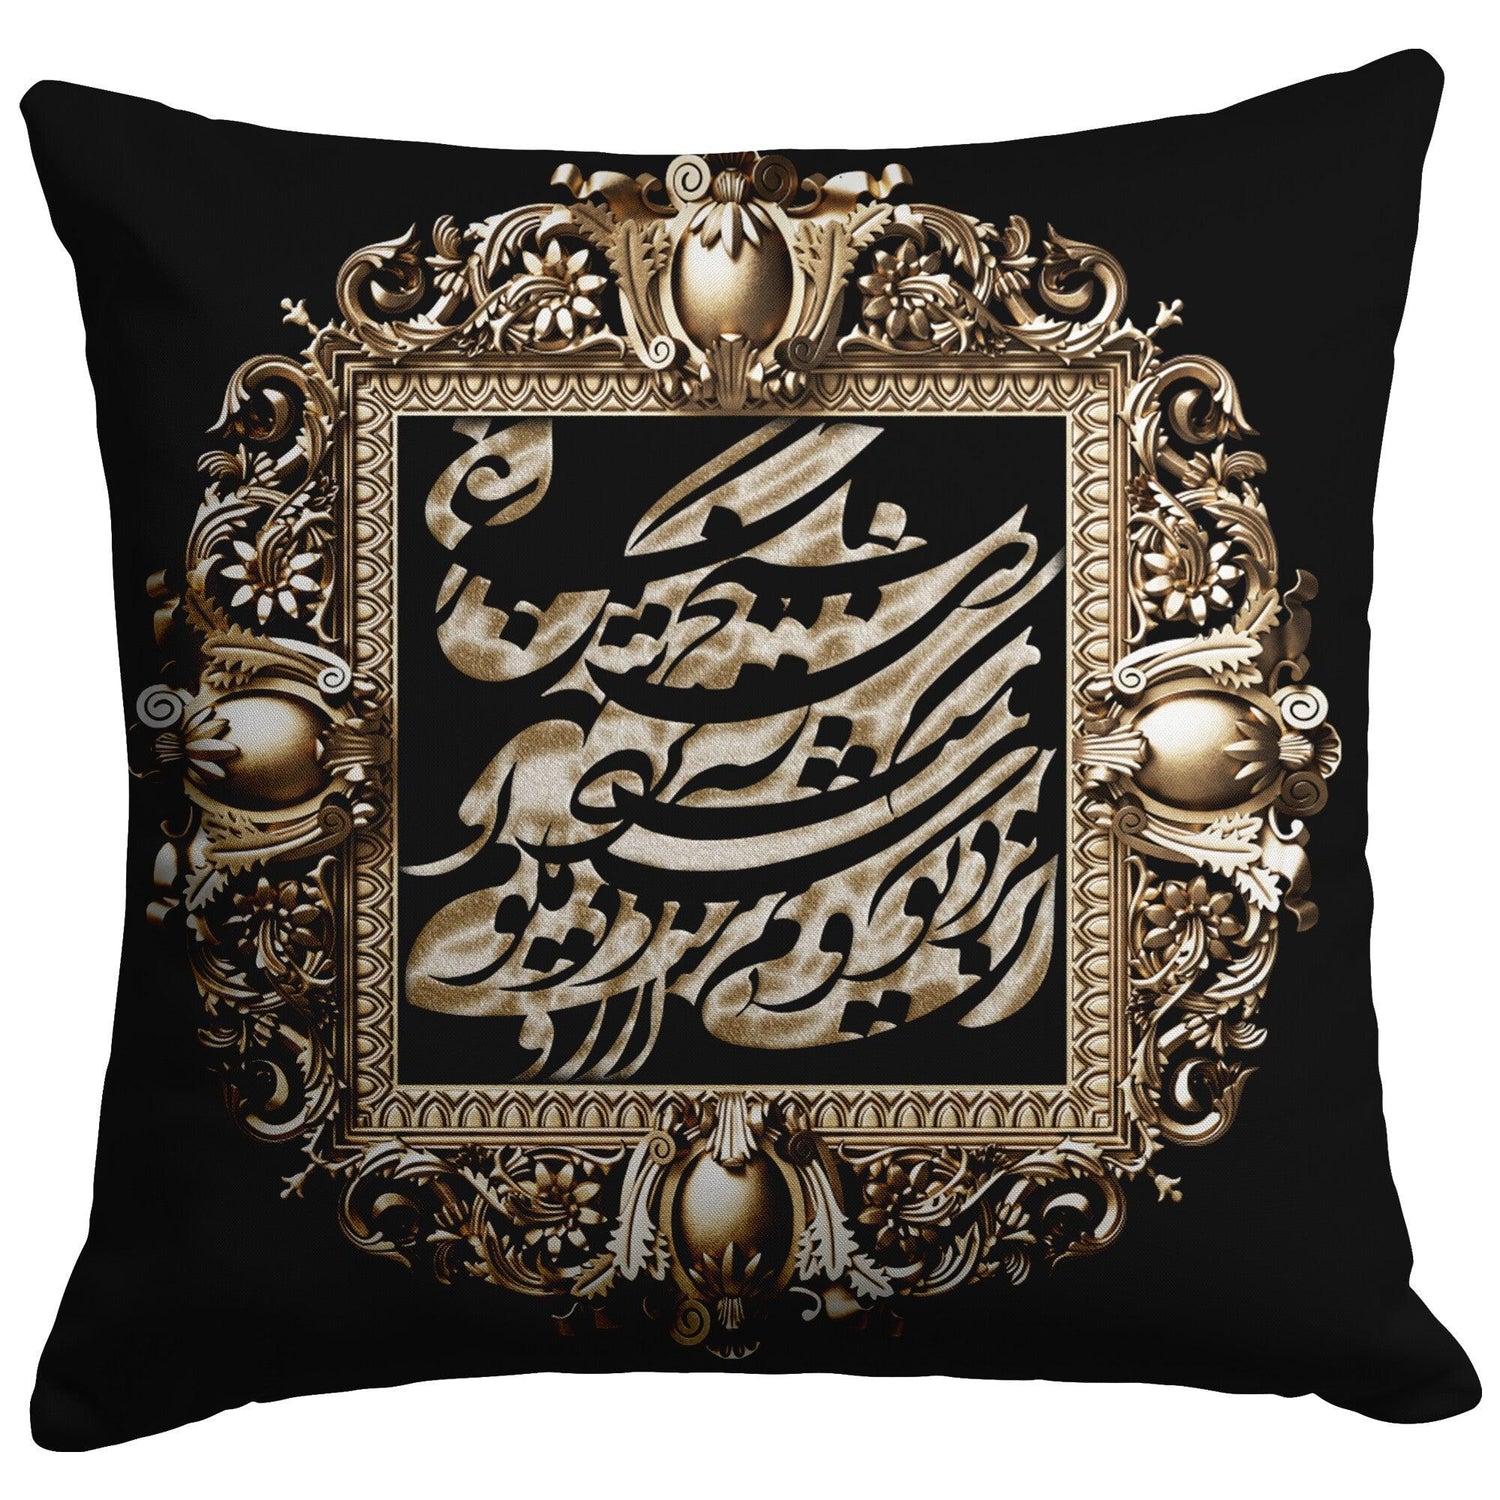 True Human - Persian Pillow - ORIAVI Persian Art, Persian Pillow